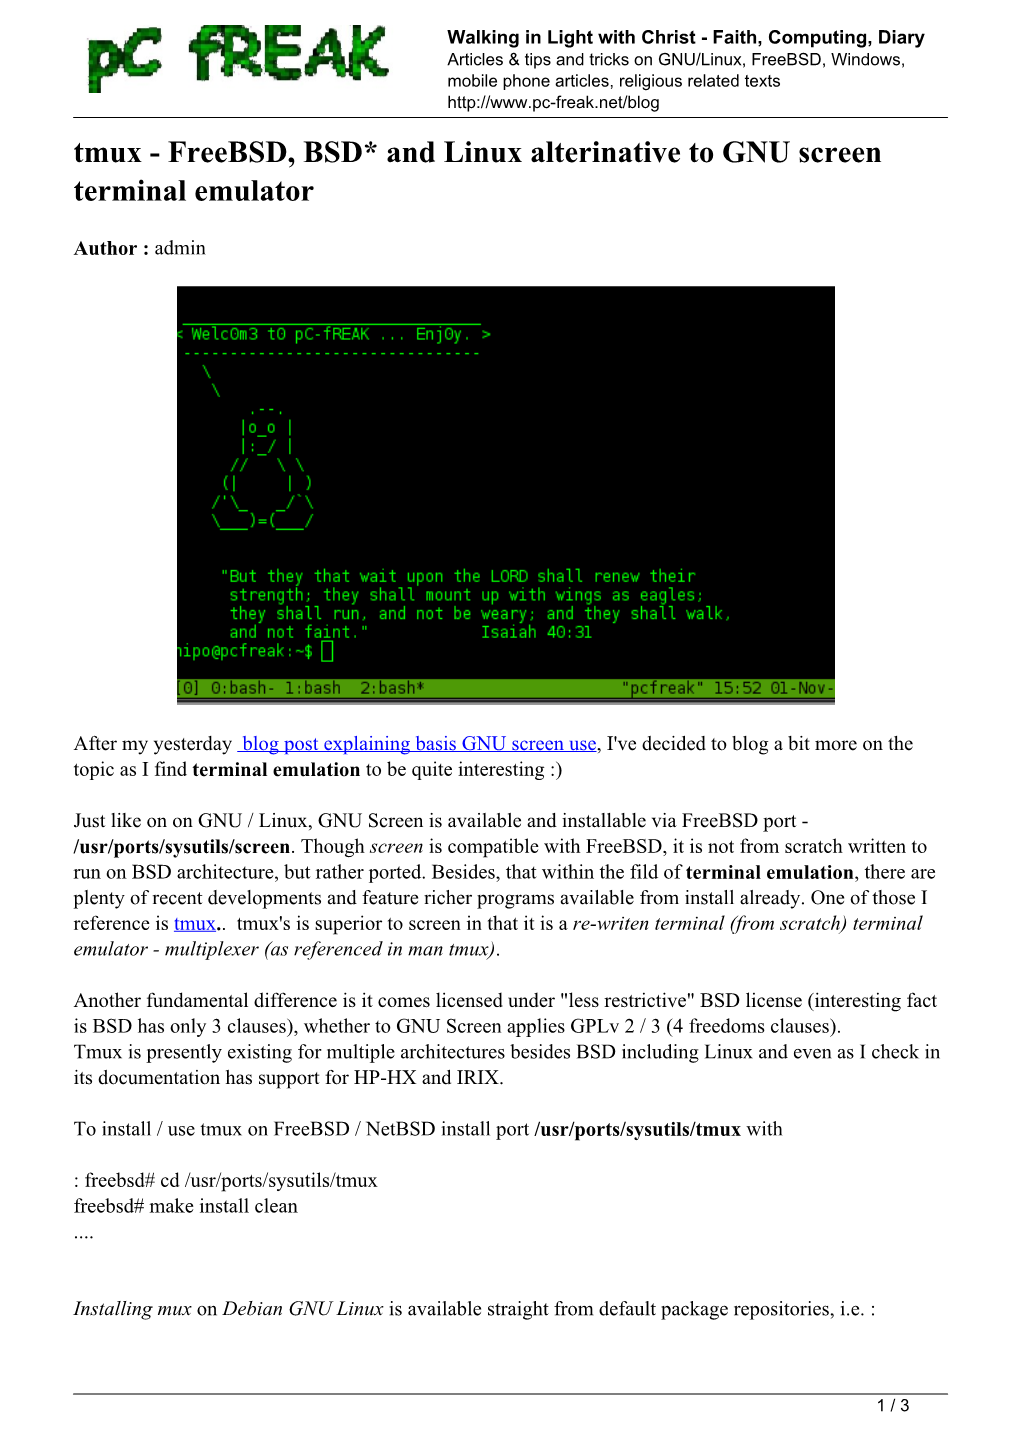 Freebsd, BSD* and Linux Alterinative to GNU Screen Terminal Emulator